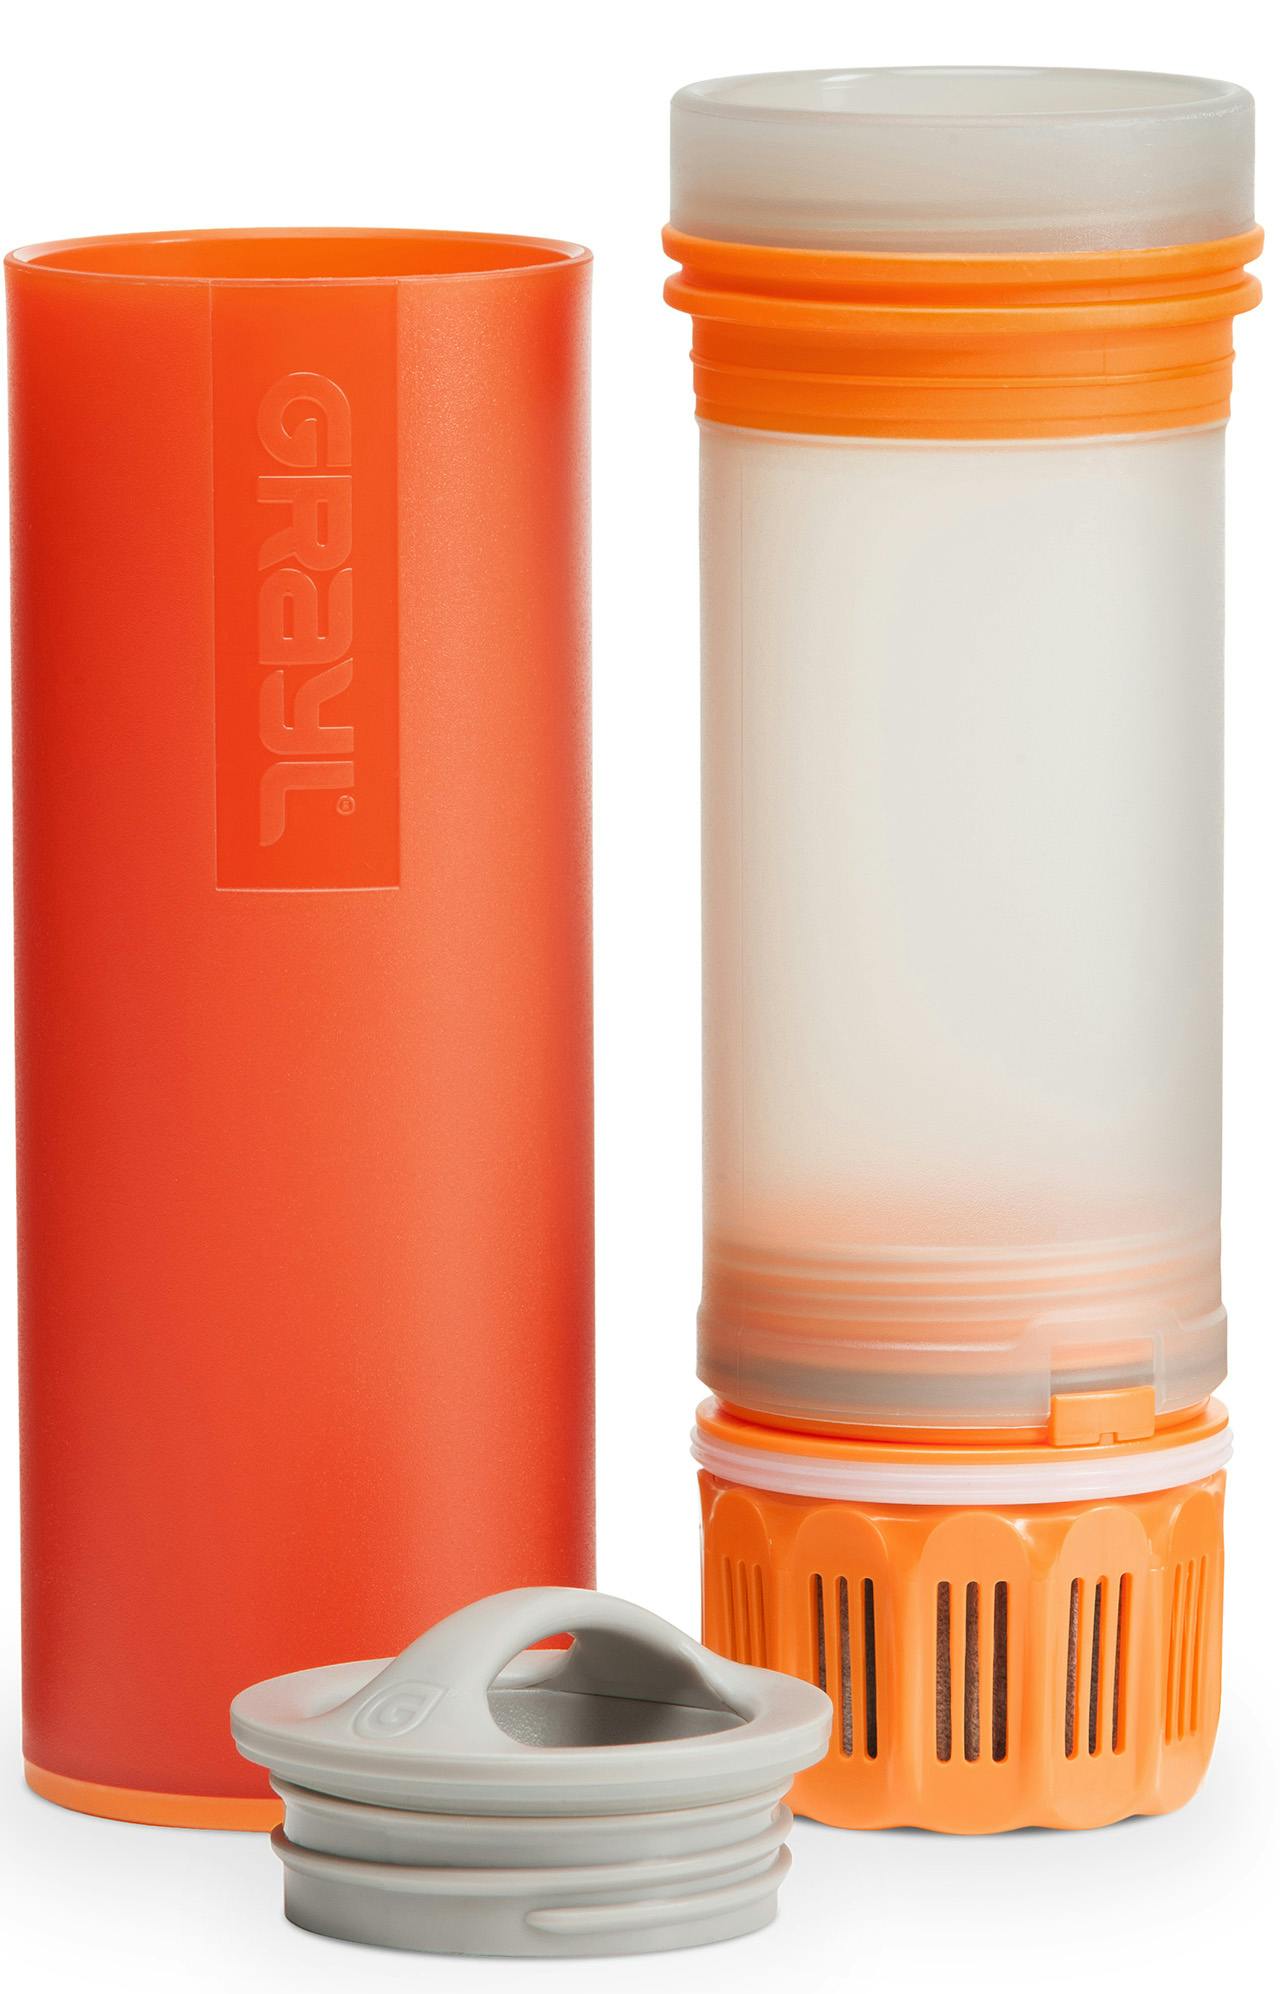 The GRAYL Ultralight Purifier Bottle